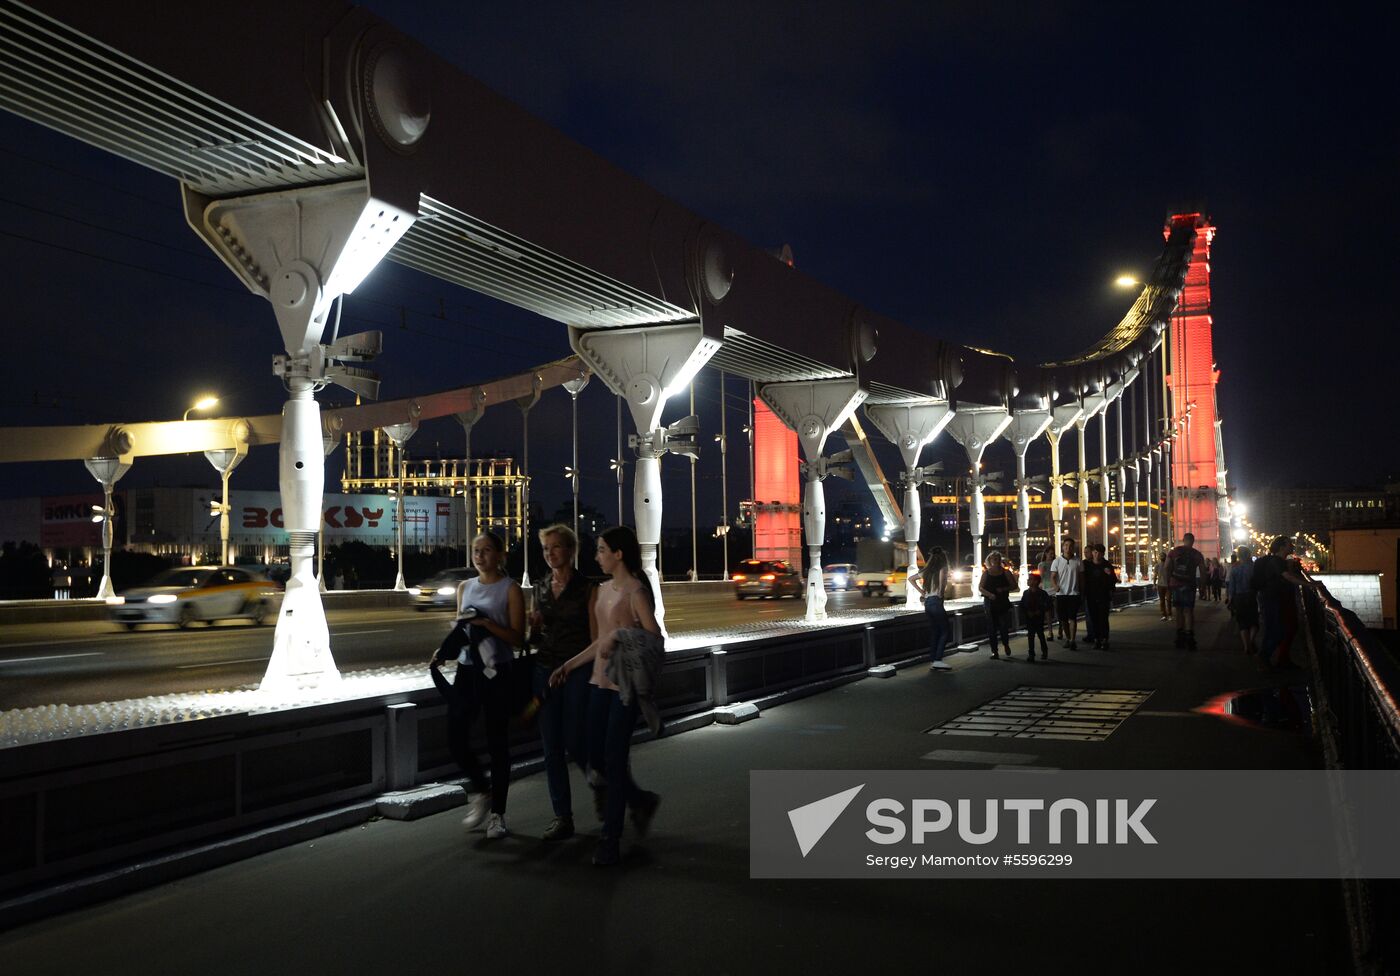 Crimean Bridge illuminated in honor of 50th anniversary of Special Olympics